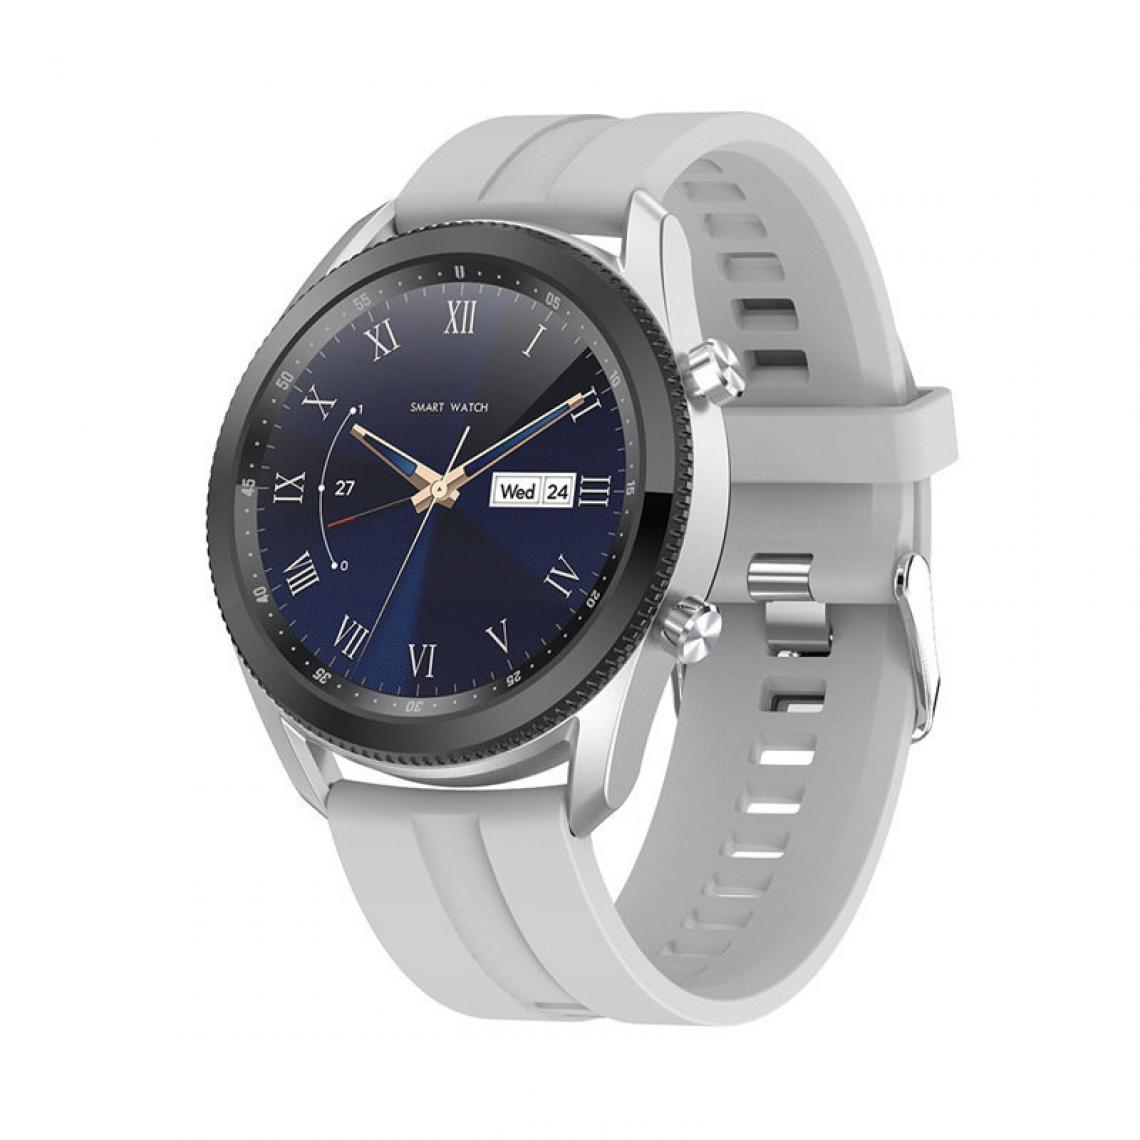 Chronotech Montres - Chronus Smart Watch Women Man 1.28 Inch Smart Watch Smartwatch with Heart Rate Monitor(Gray) - Montre connectée